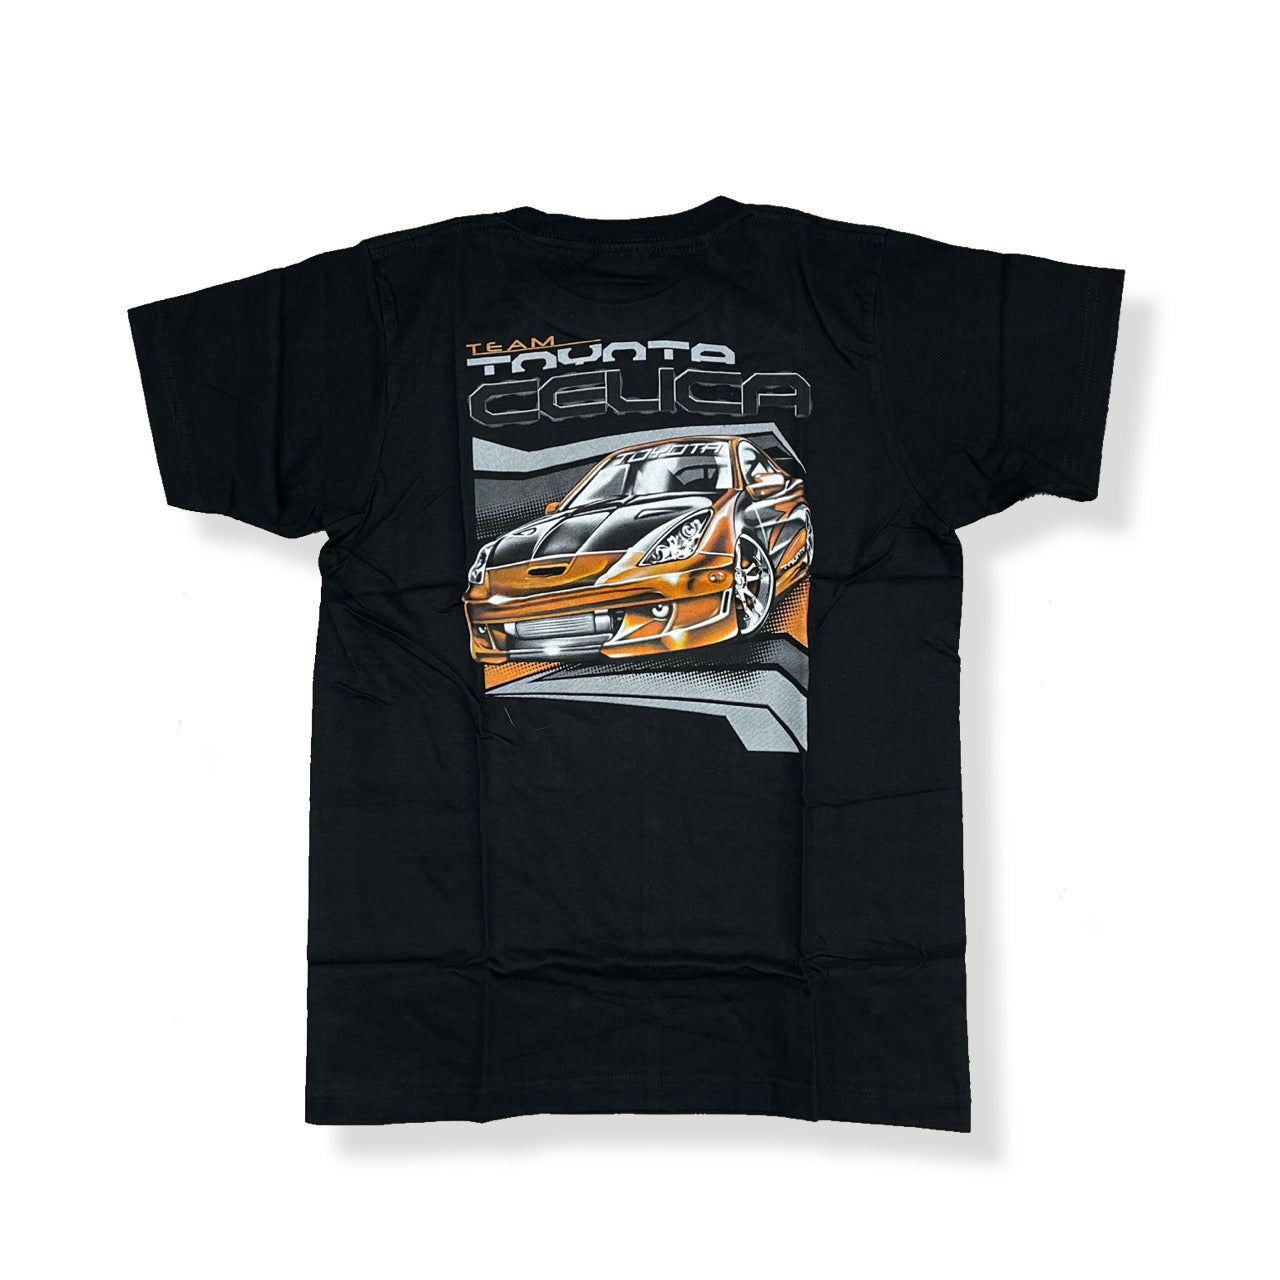 Team Toyota GT-S Celia T-shirt Black